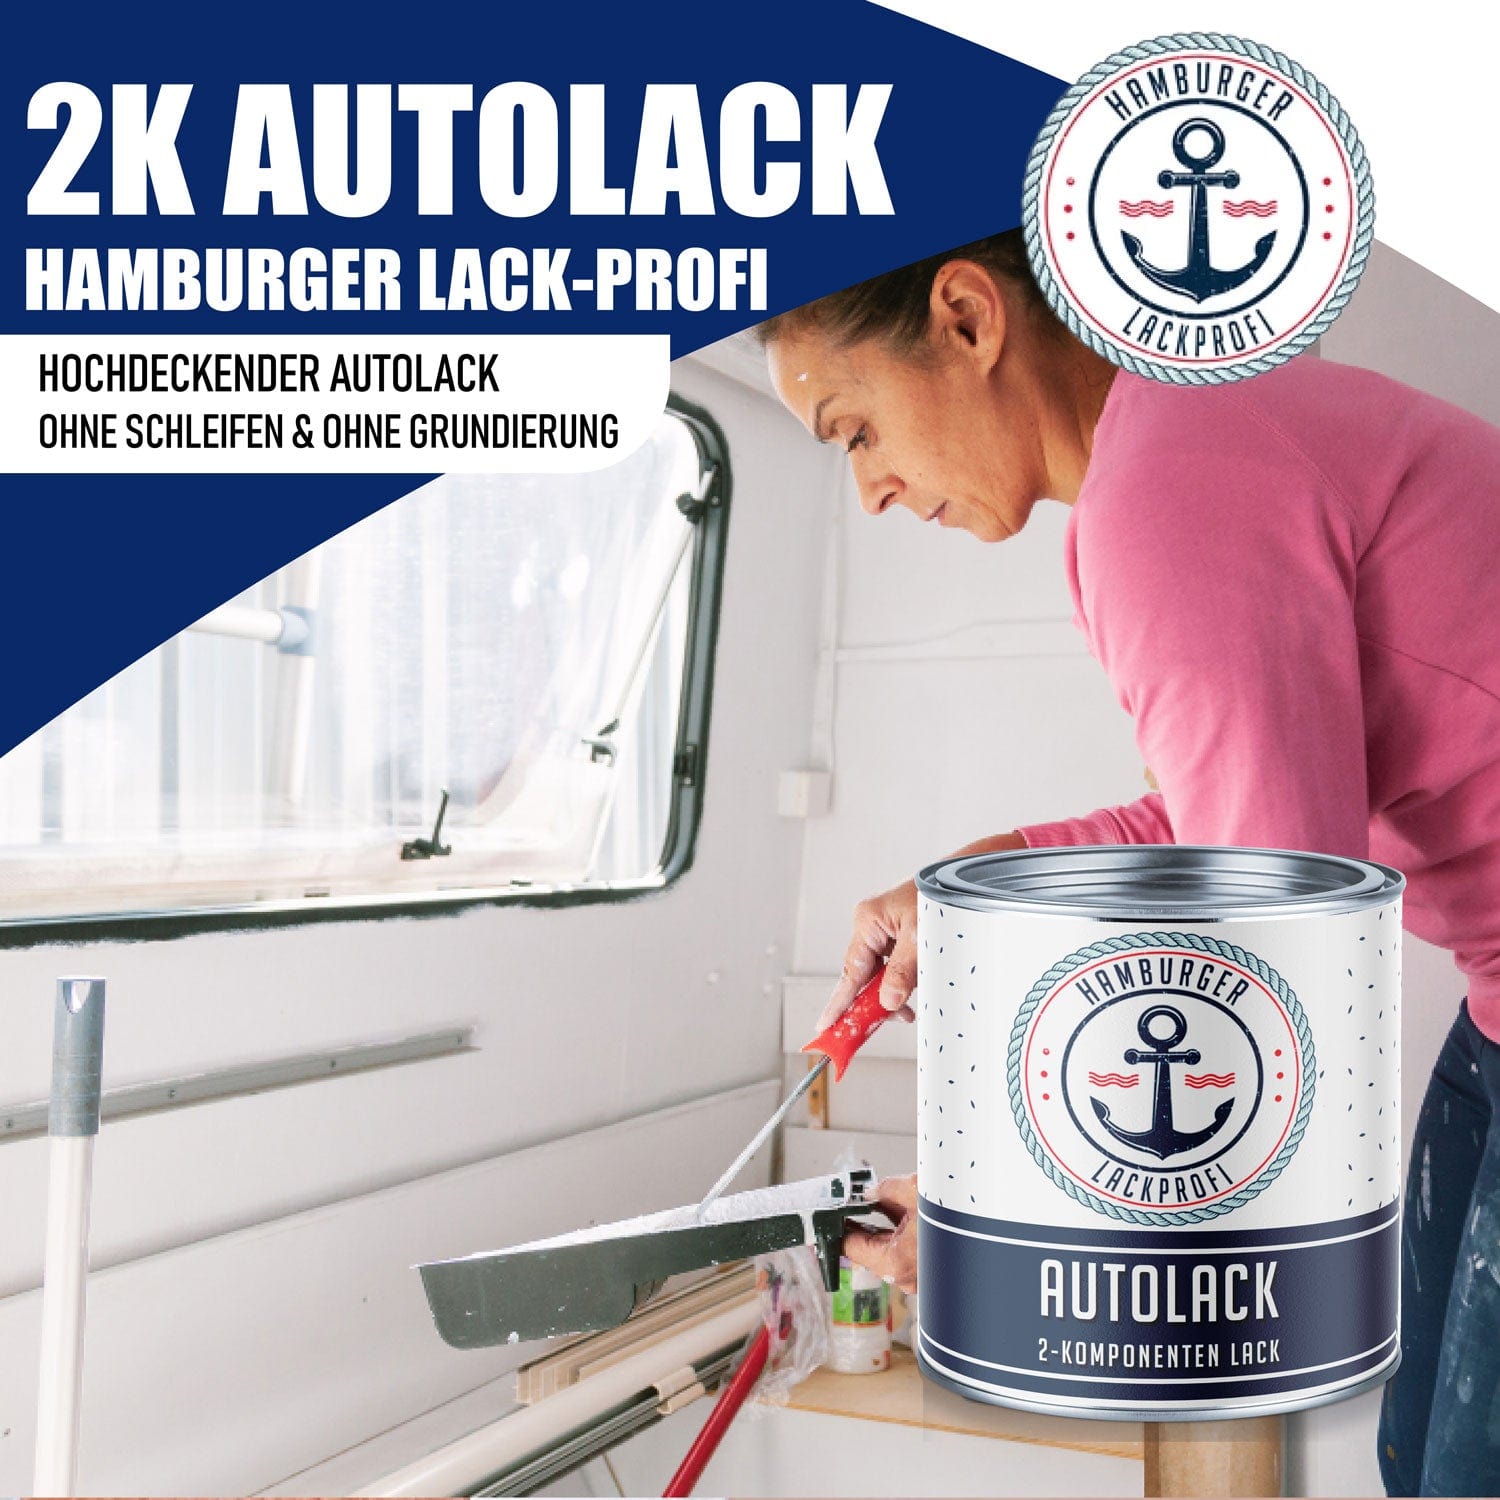 Hamburger Lack-Profi Lacke & Beschichtungen Hamburger Lack-Profi 2K Autolack in Steingrau RAL 7030 mit Lackierset (X300) & Verdünnung (1 L) - 30% Sparangebot